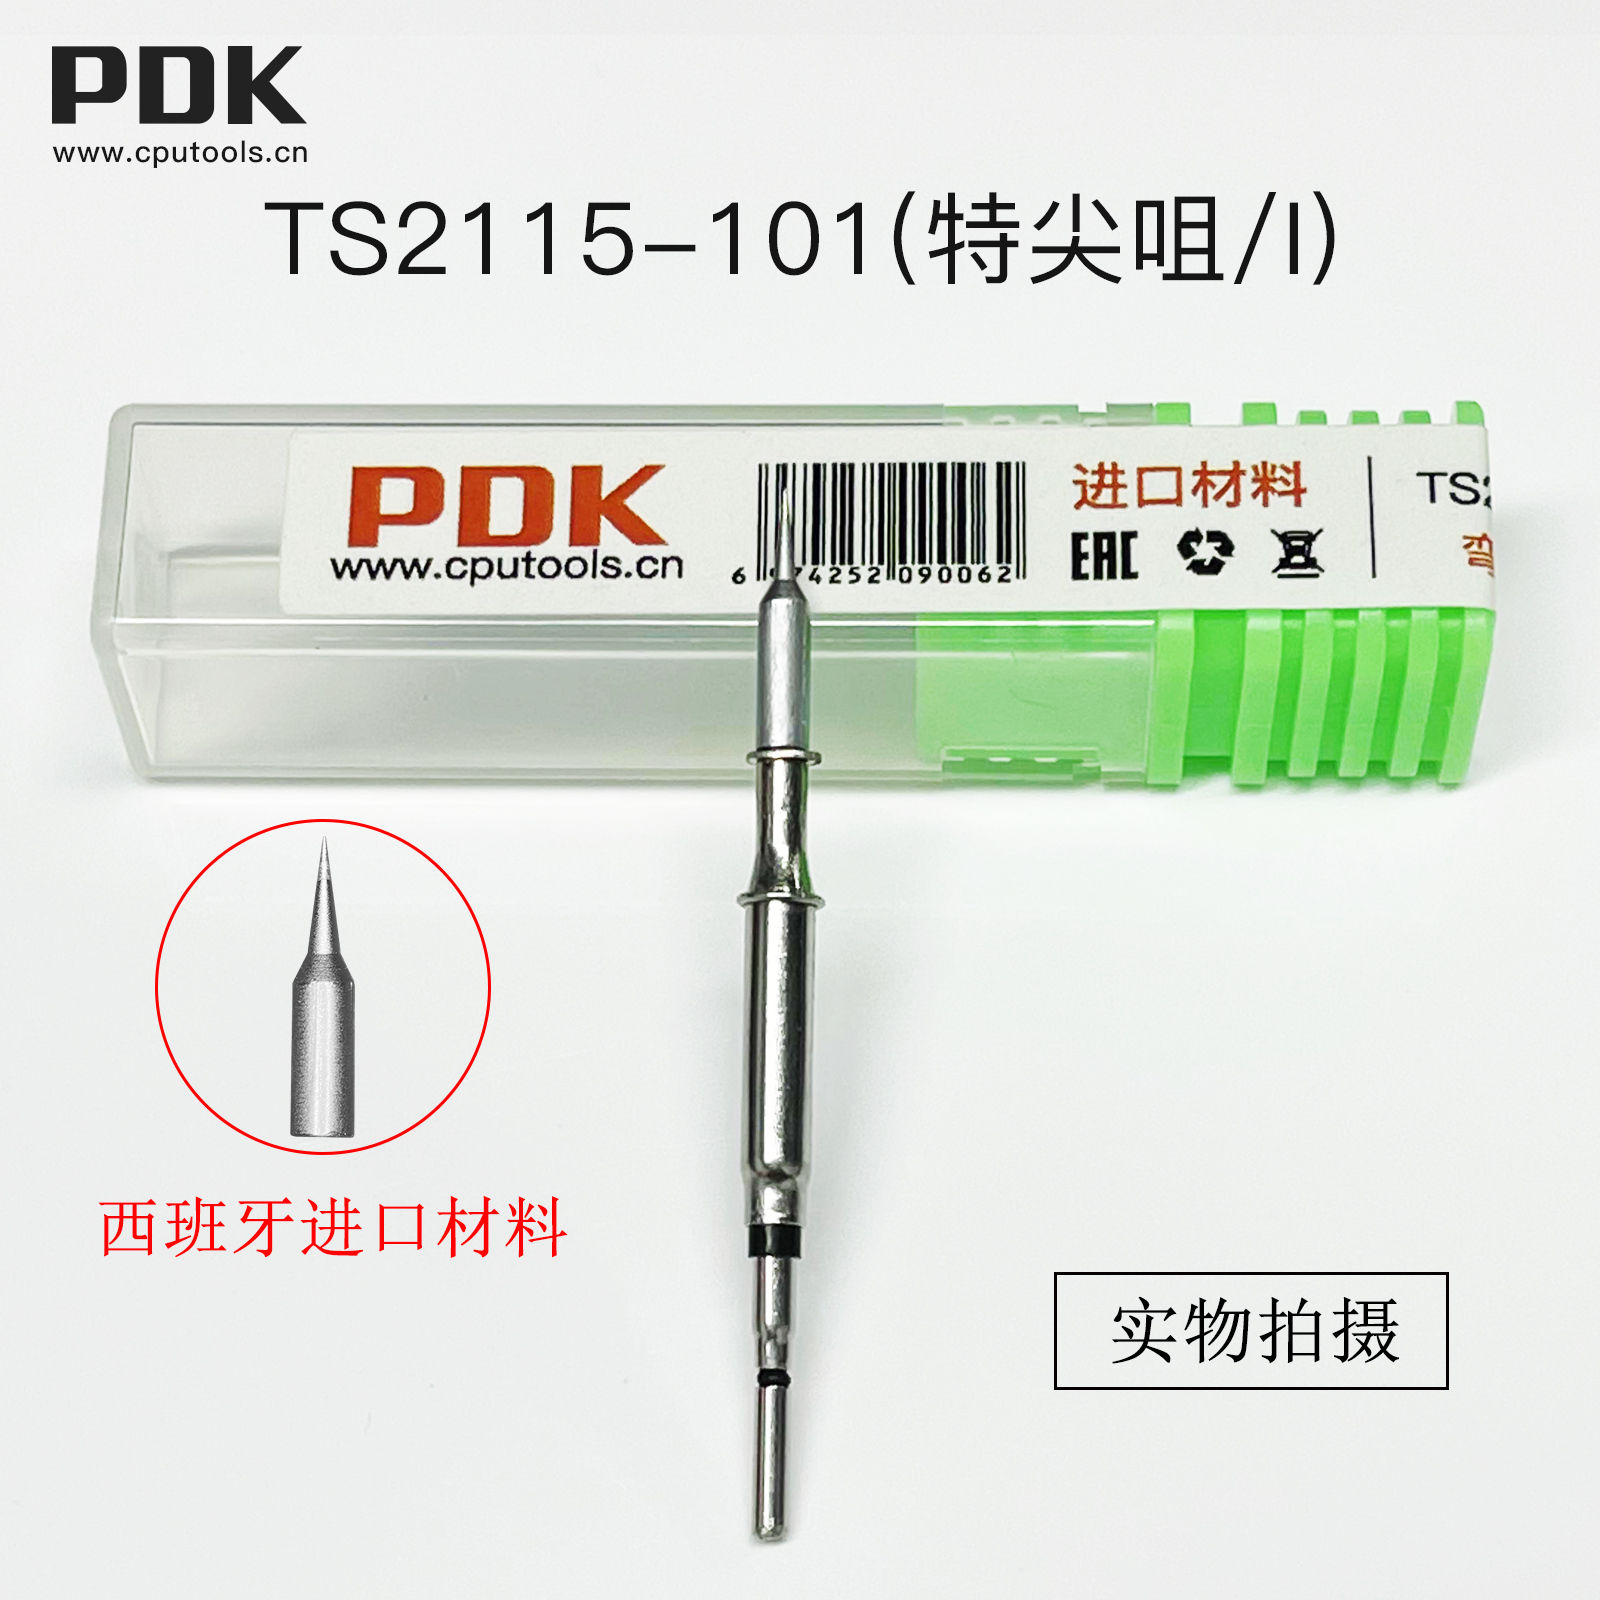 PDK TS2-C115 hand shank(图2)